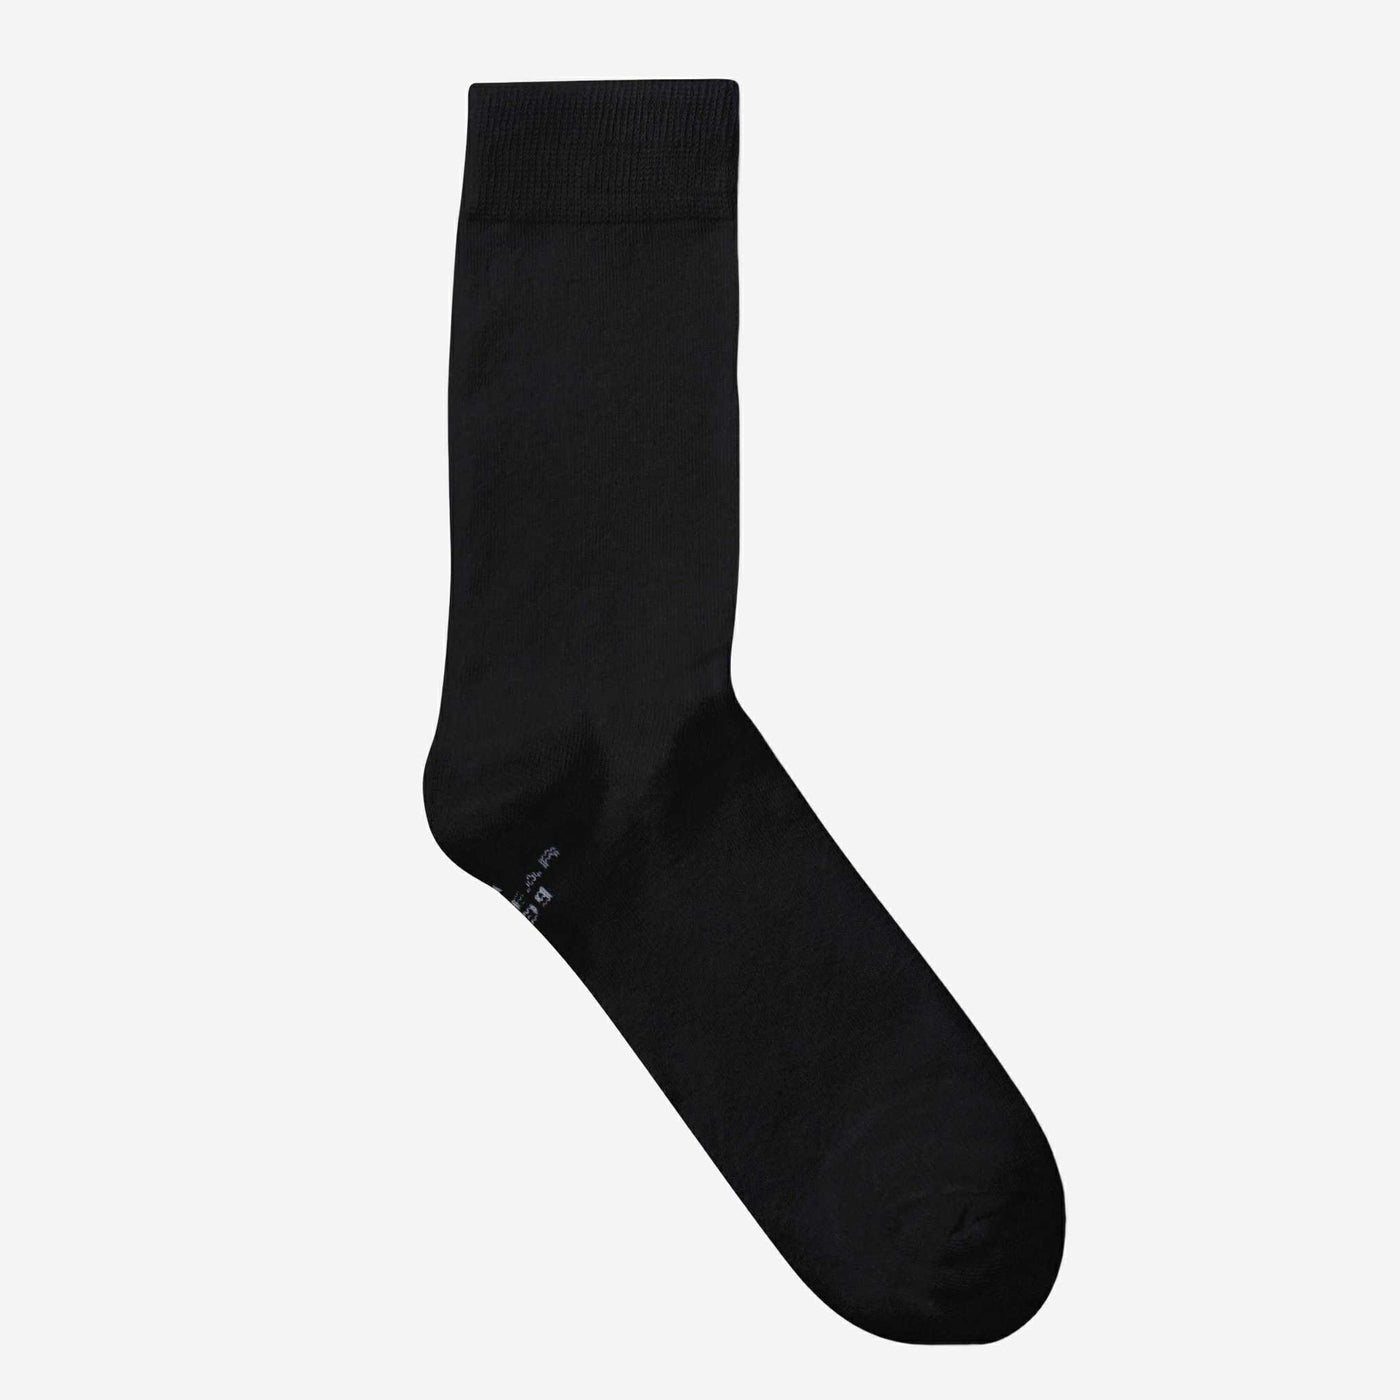 Black bamboo socks